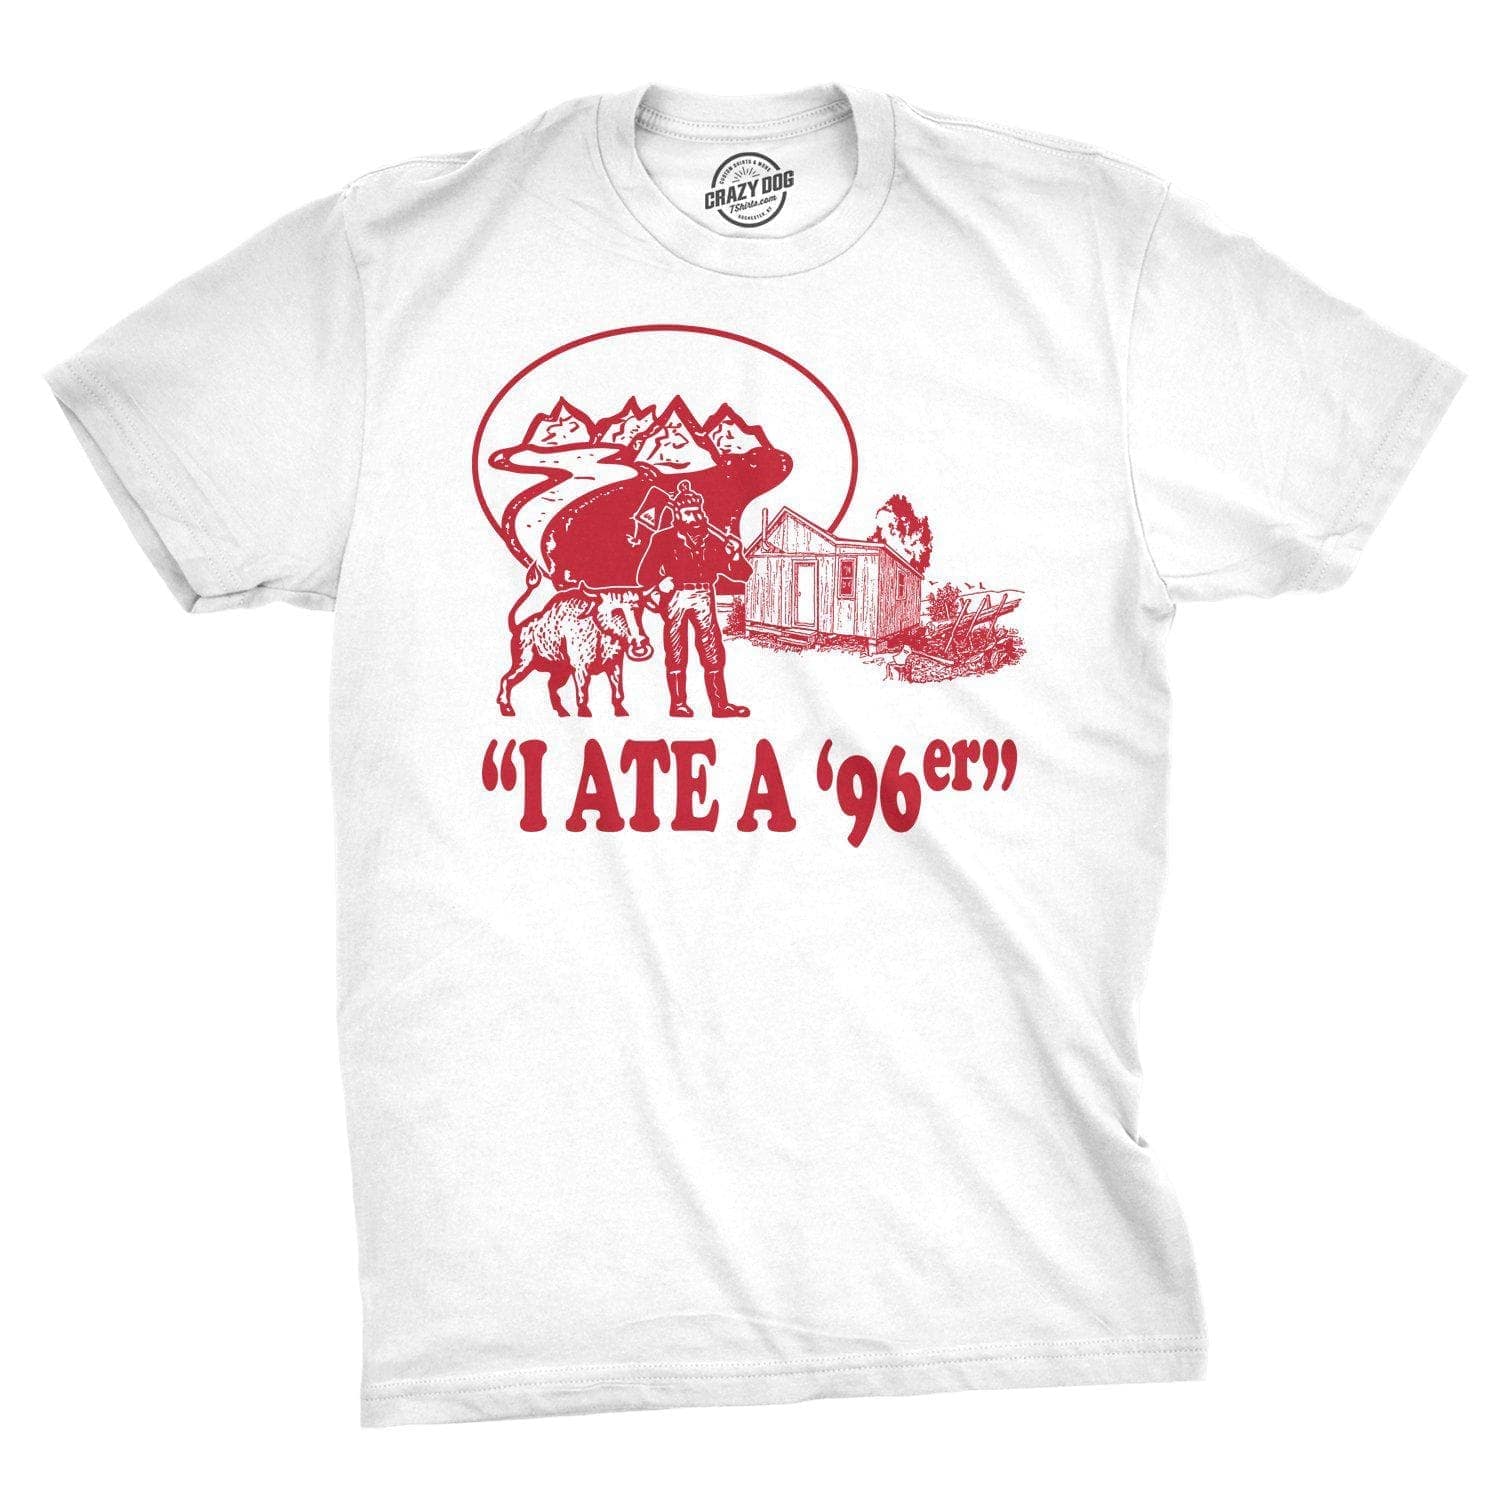 Ate A 96er Men's Tshirt  -  Crazy Dog T-Shirts